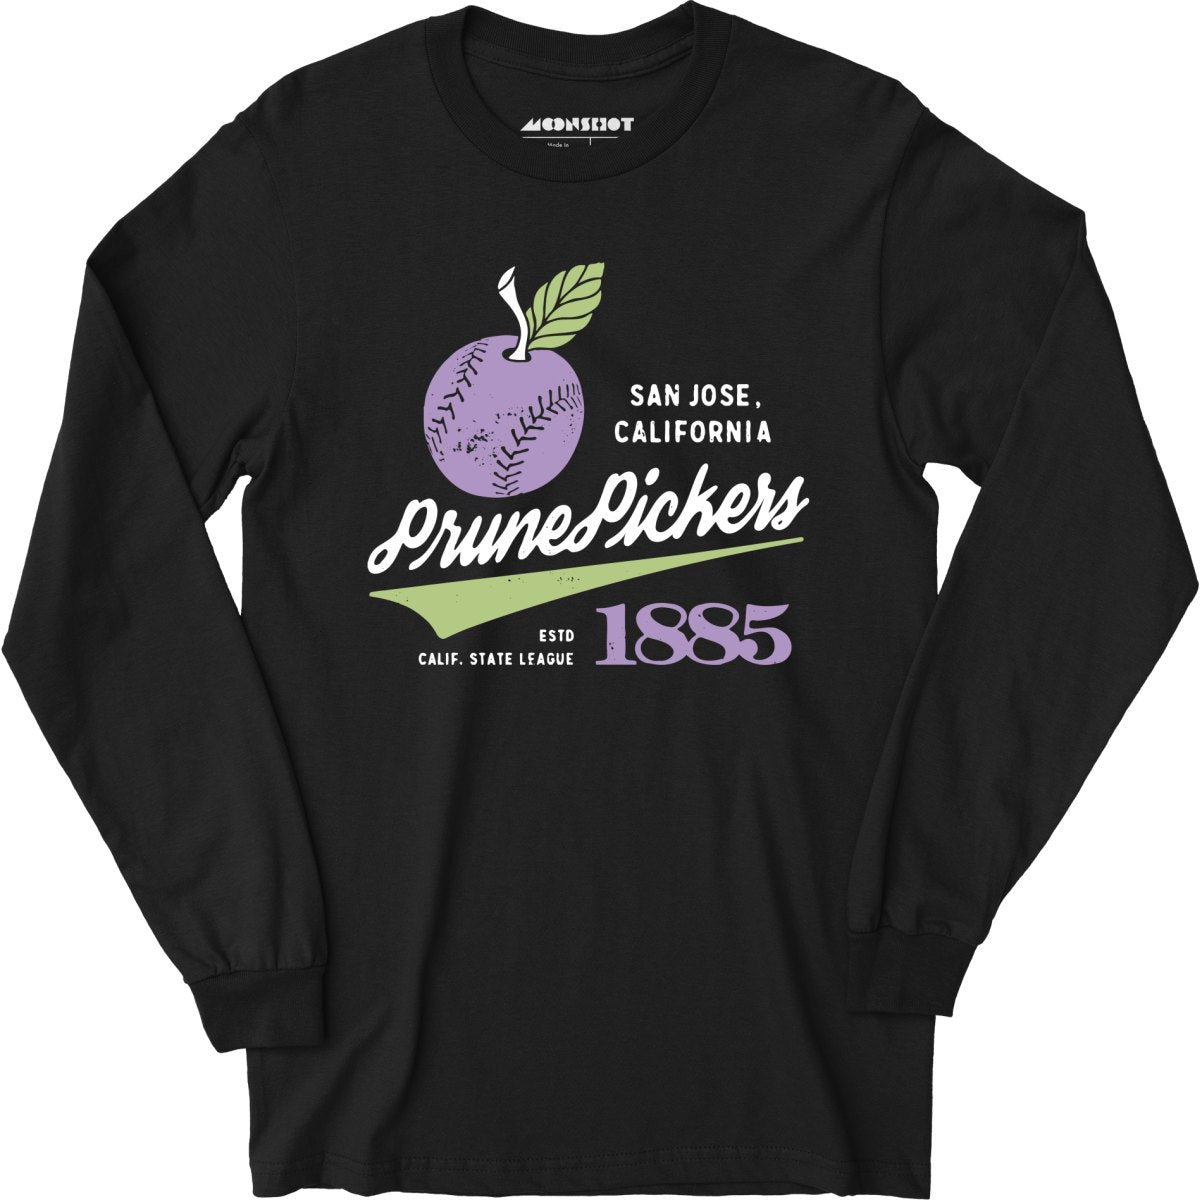 San Jose Prune Pickers - California - Vintage Defunct Baseball Teams - Long Sleeve T-Shirt